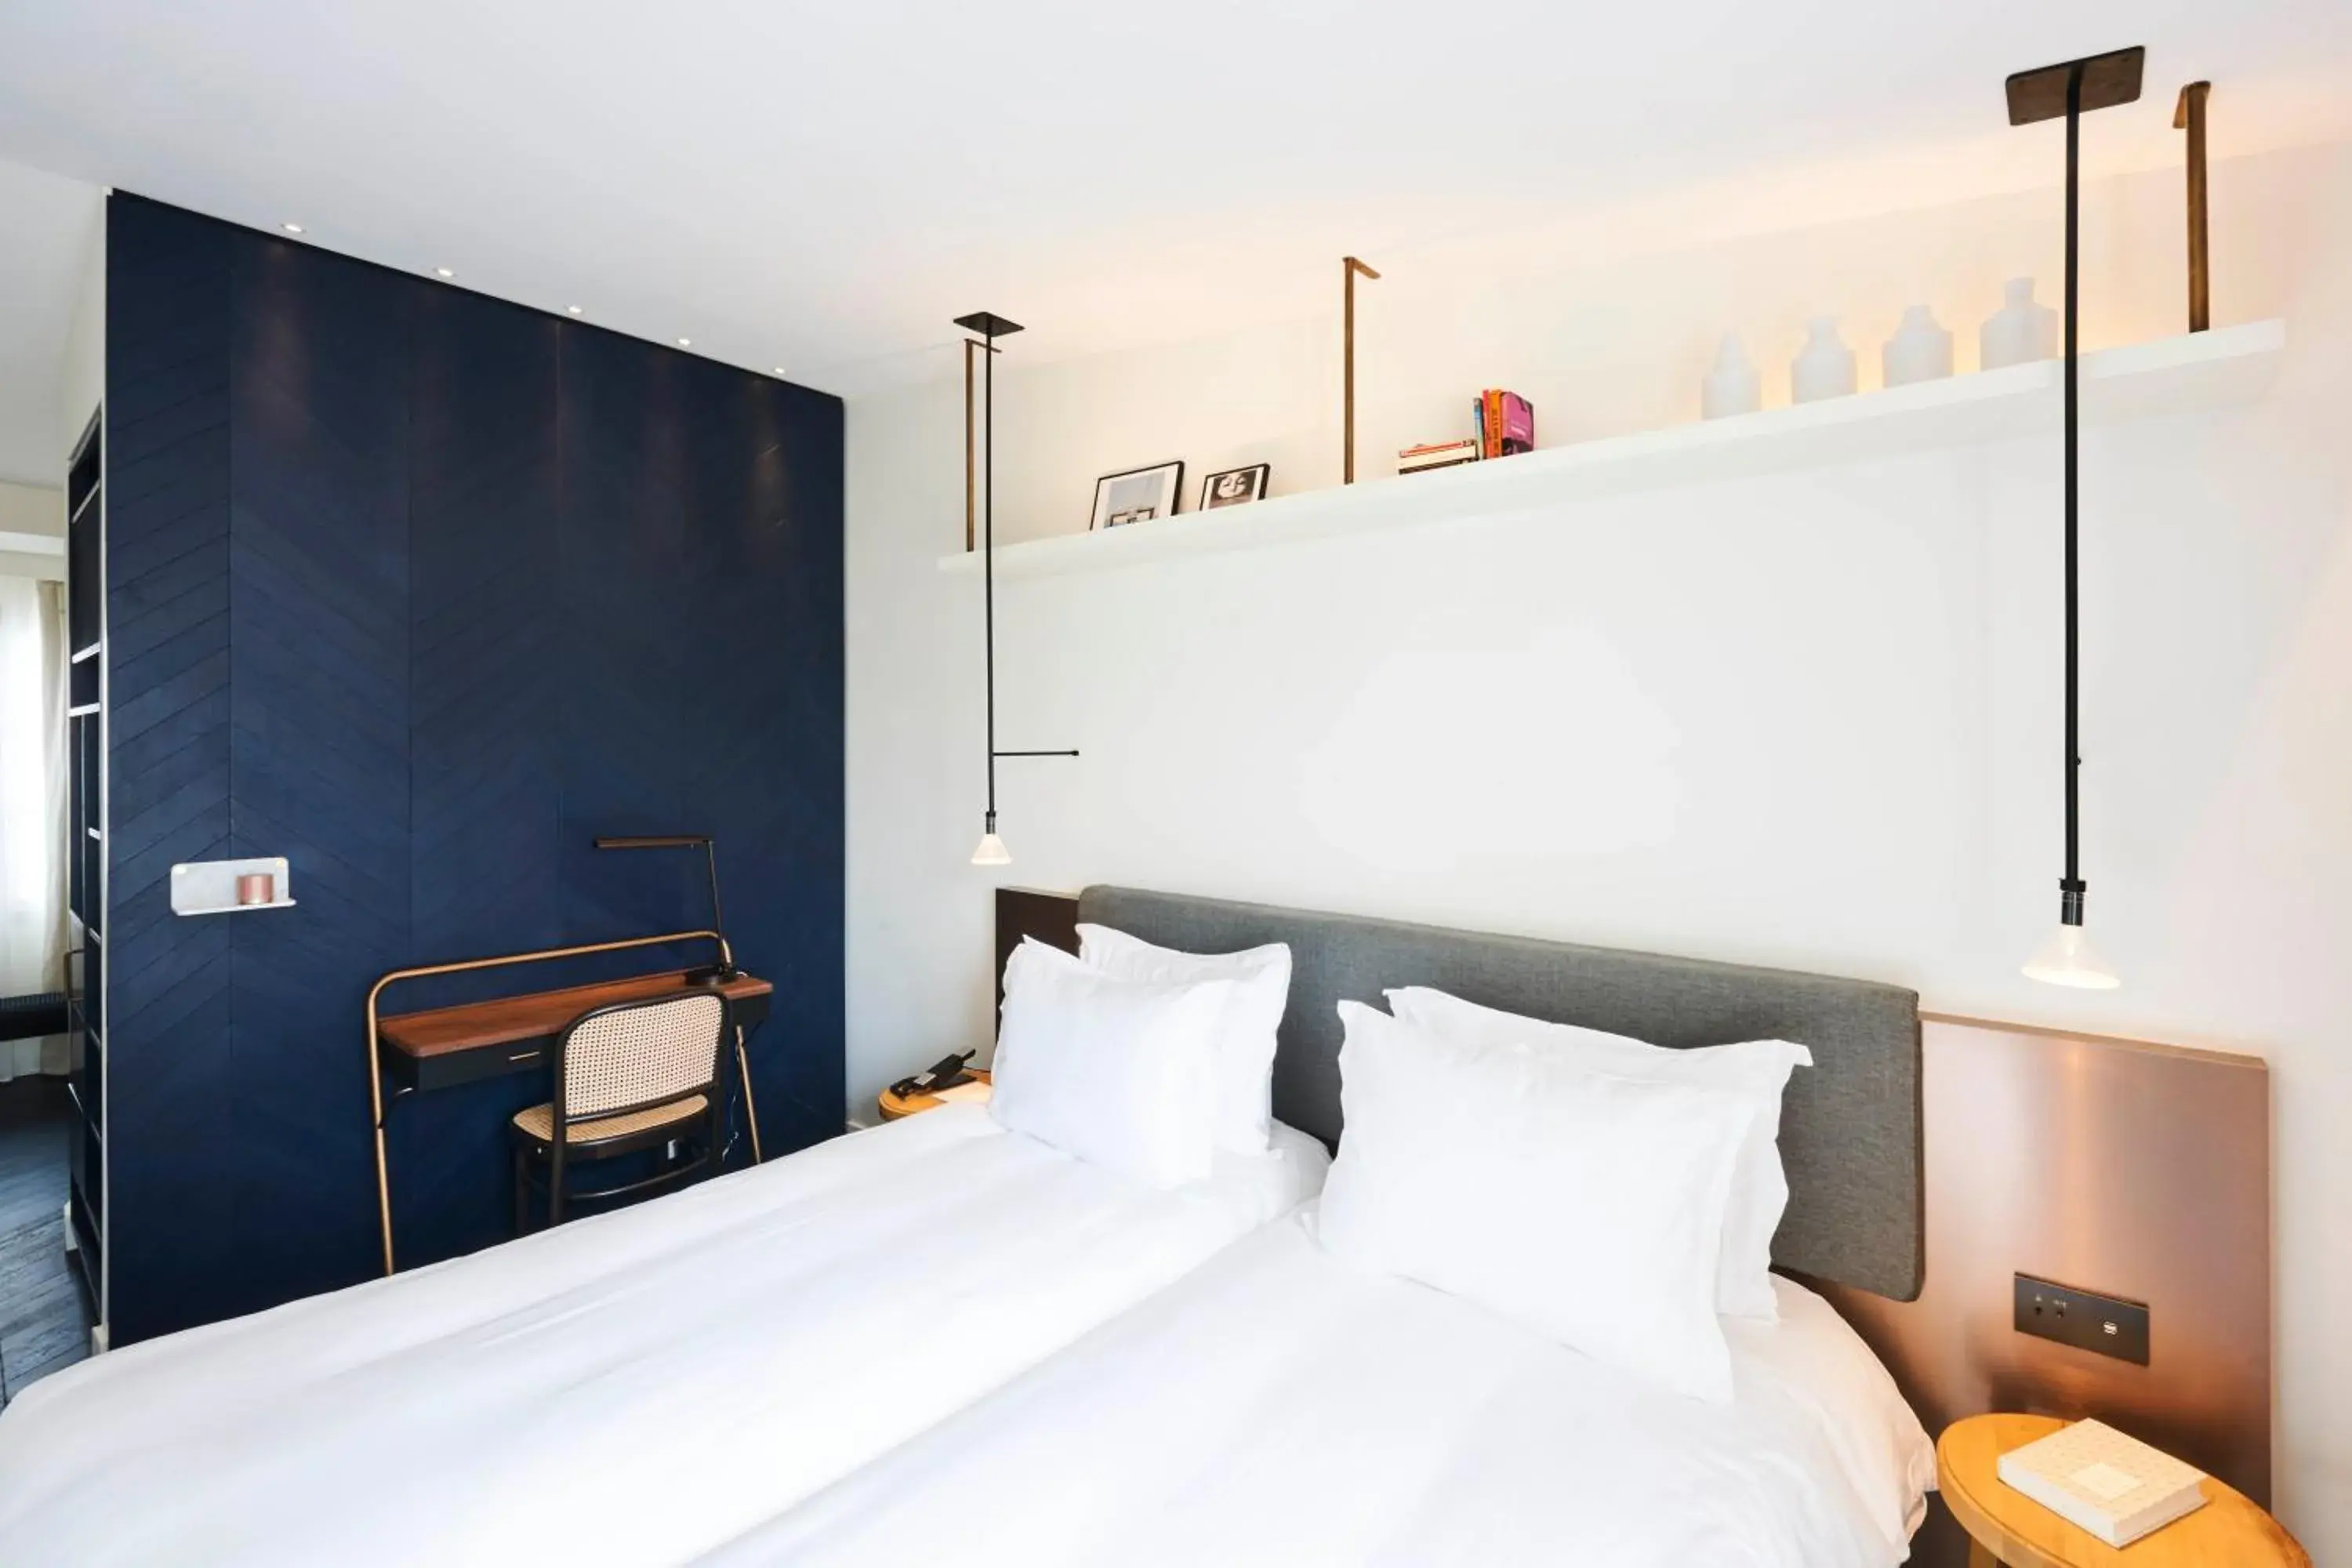 Bed, Room Photo in Hôtel Amastan Paris